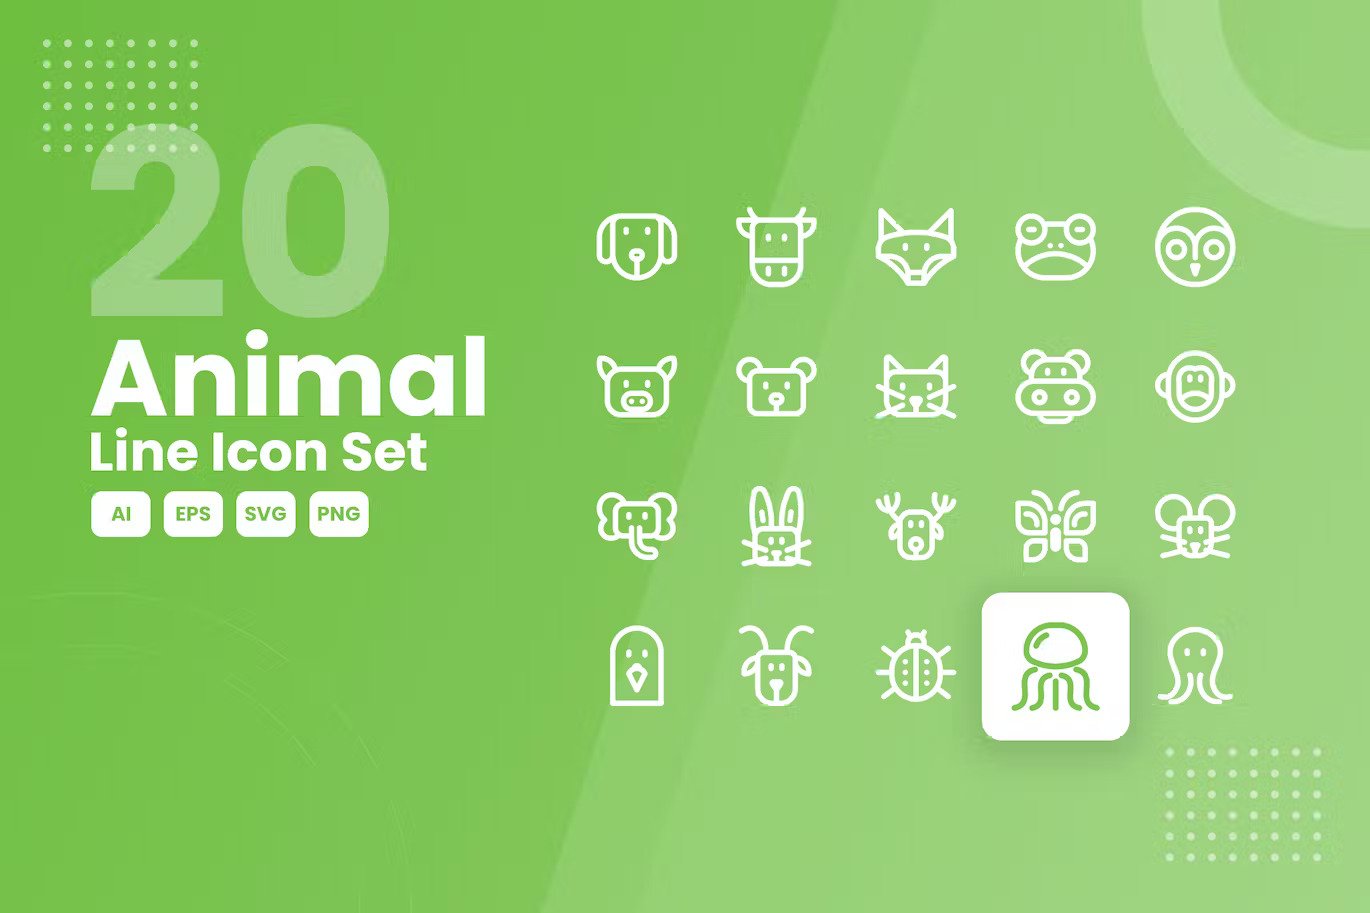 Animal line icon set